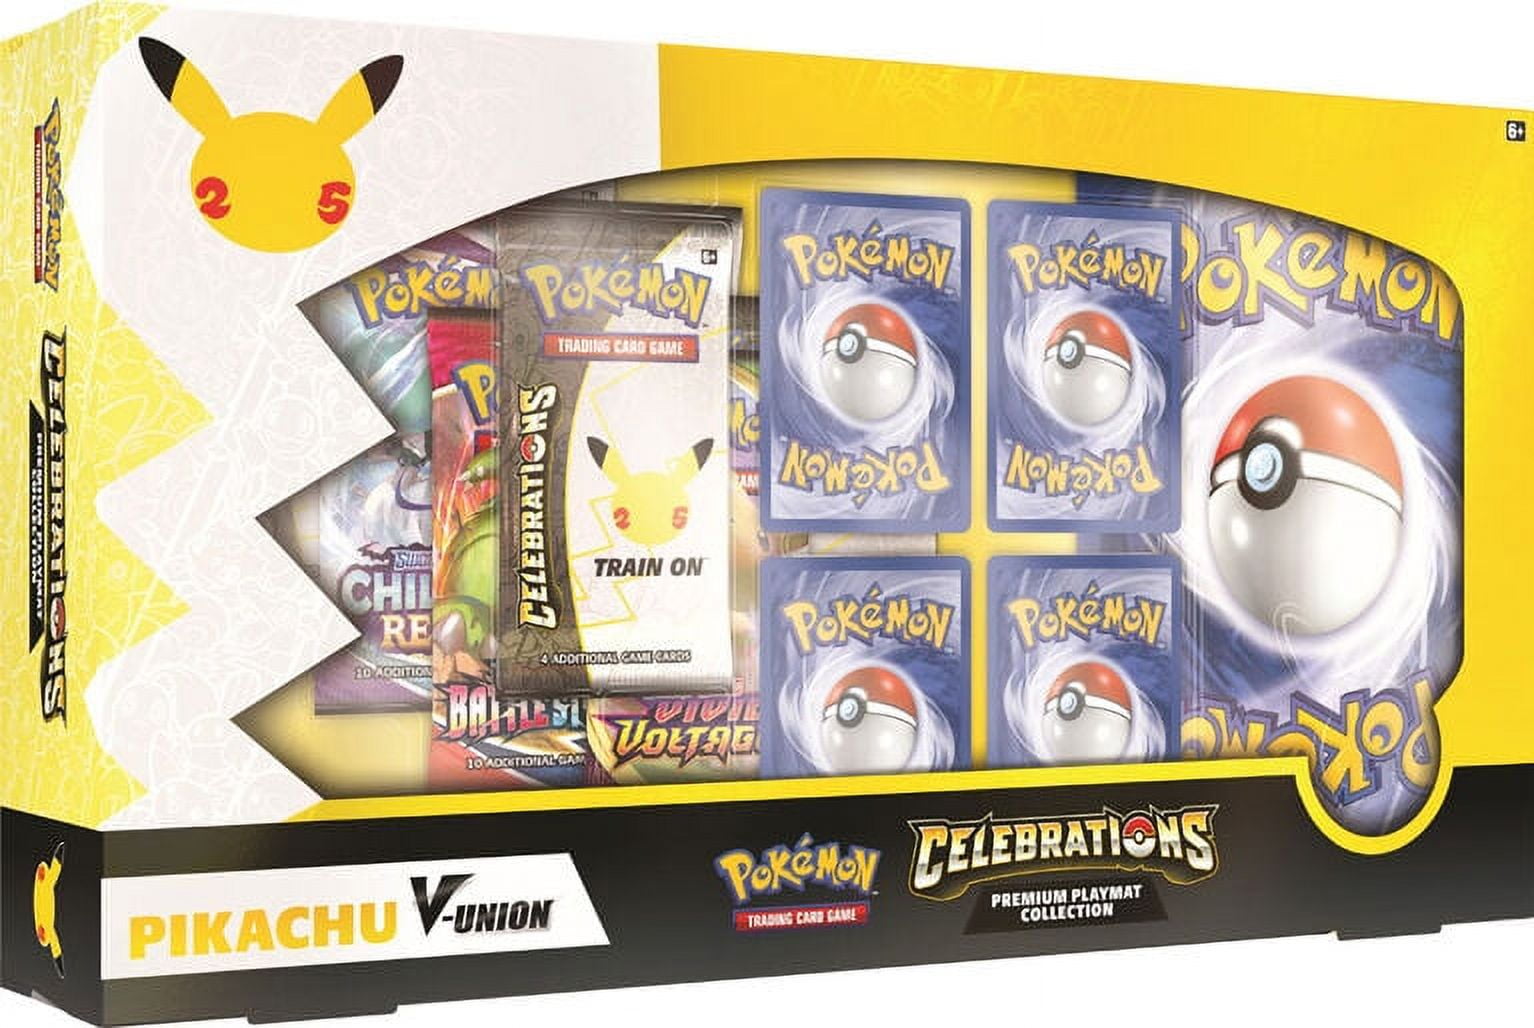 Pokémon Gold Pack Bundle 4 Packs & 1 Pokémon Official Playmat